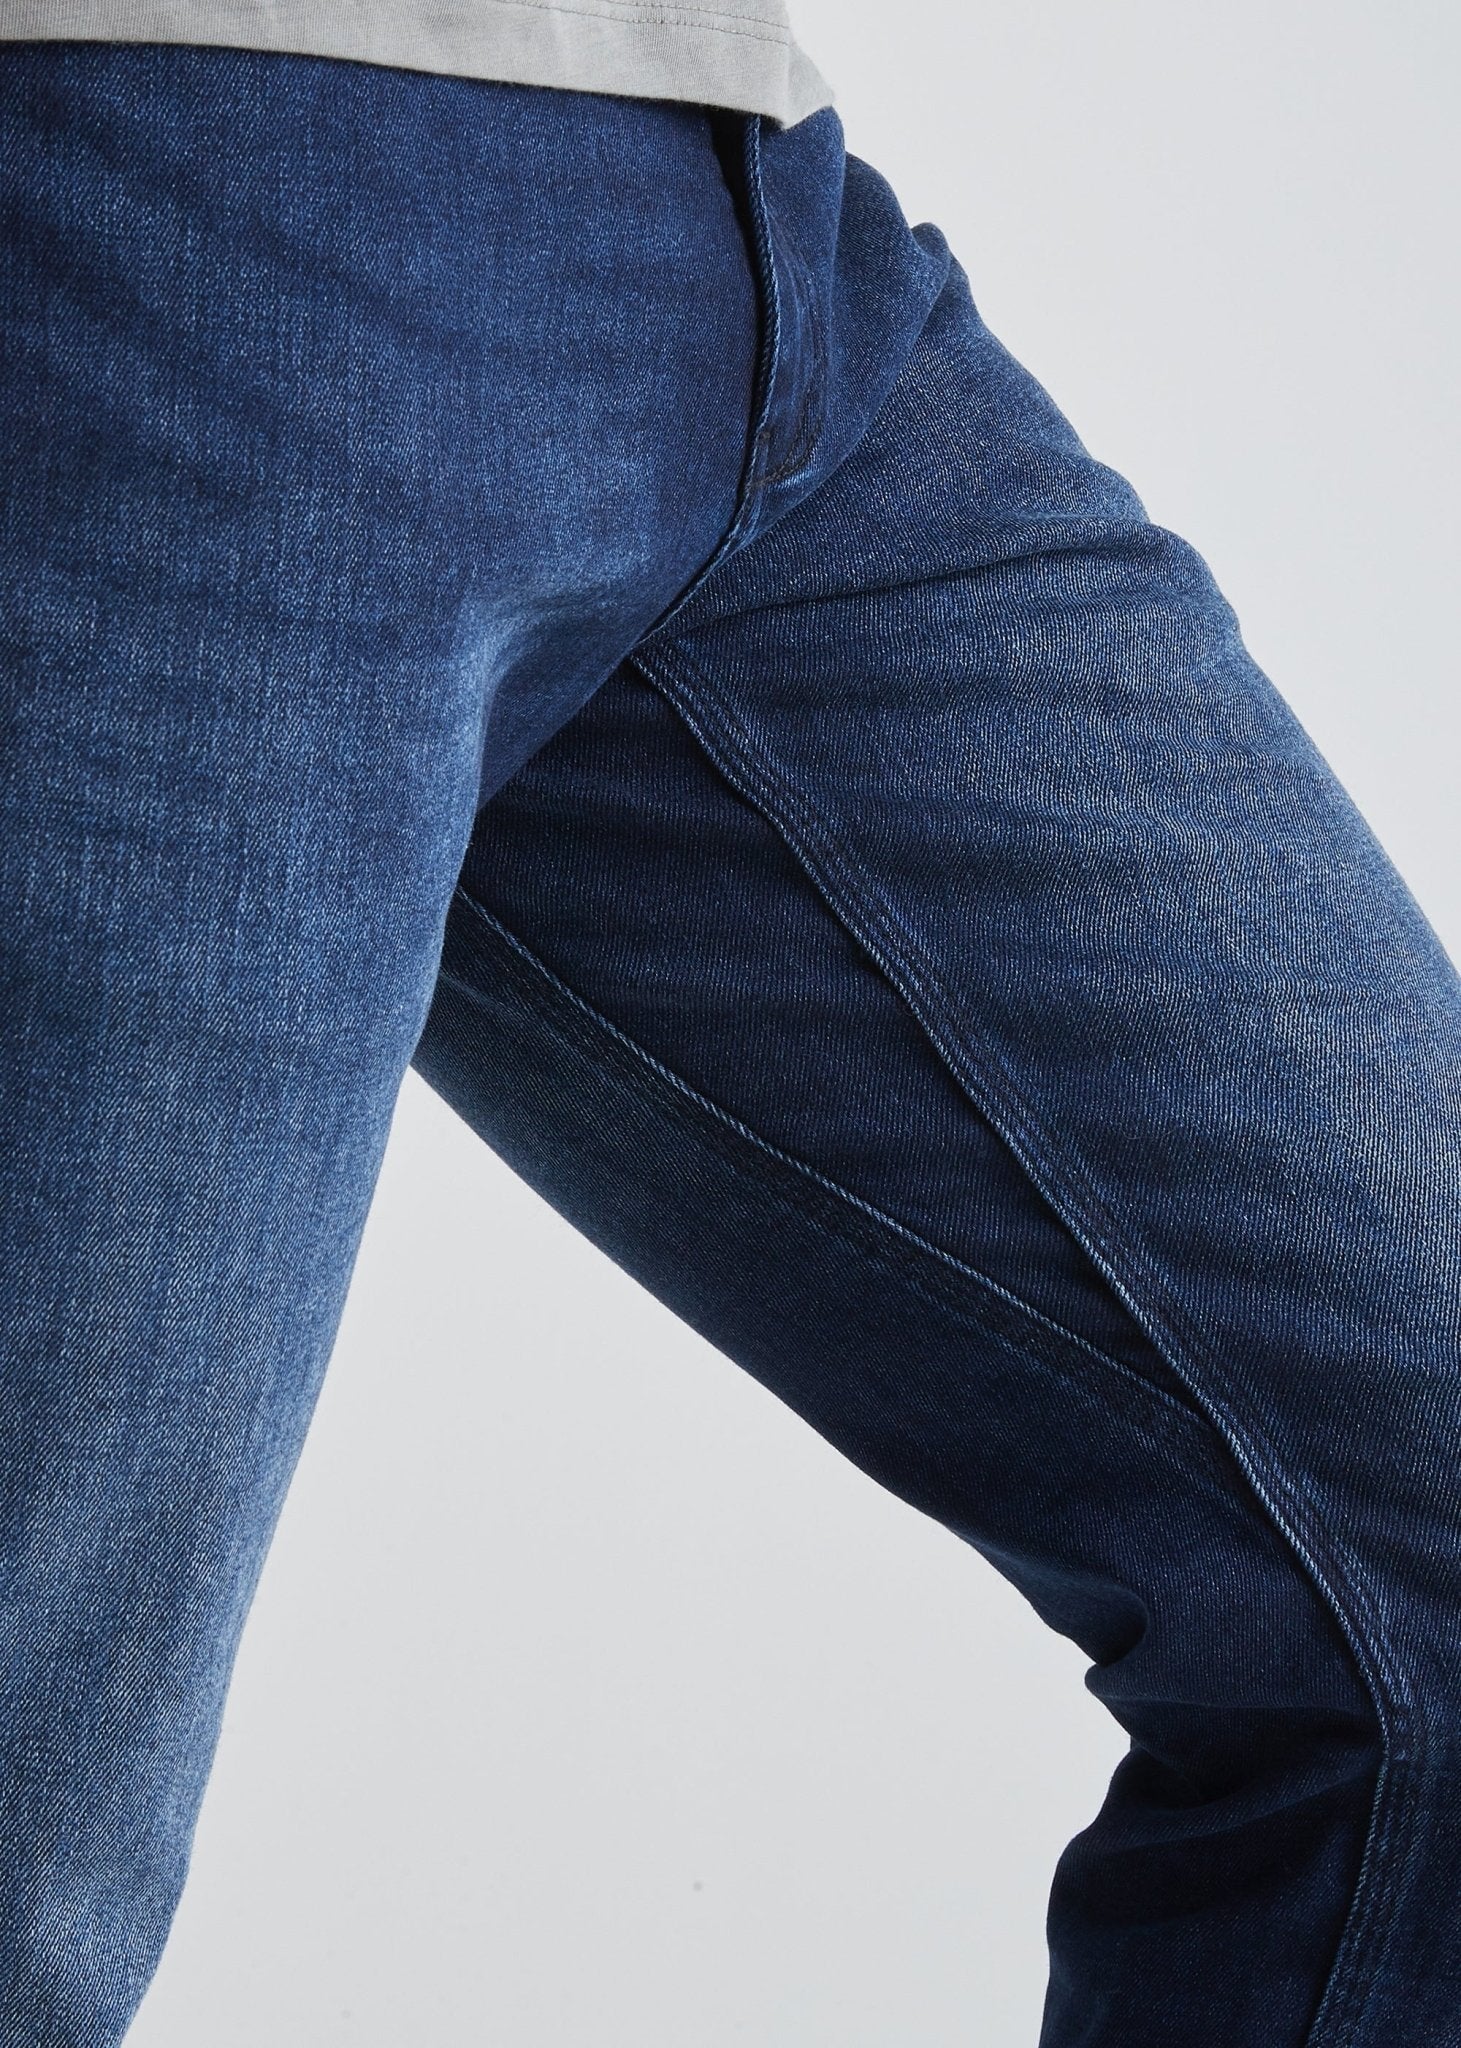 mens blue slim fit water resistant stretch jeans gusset detail